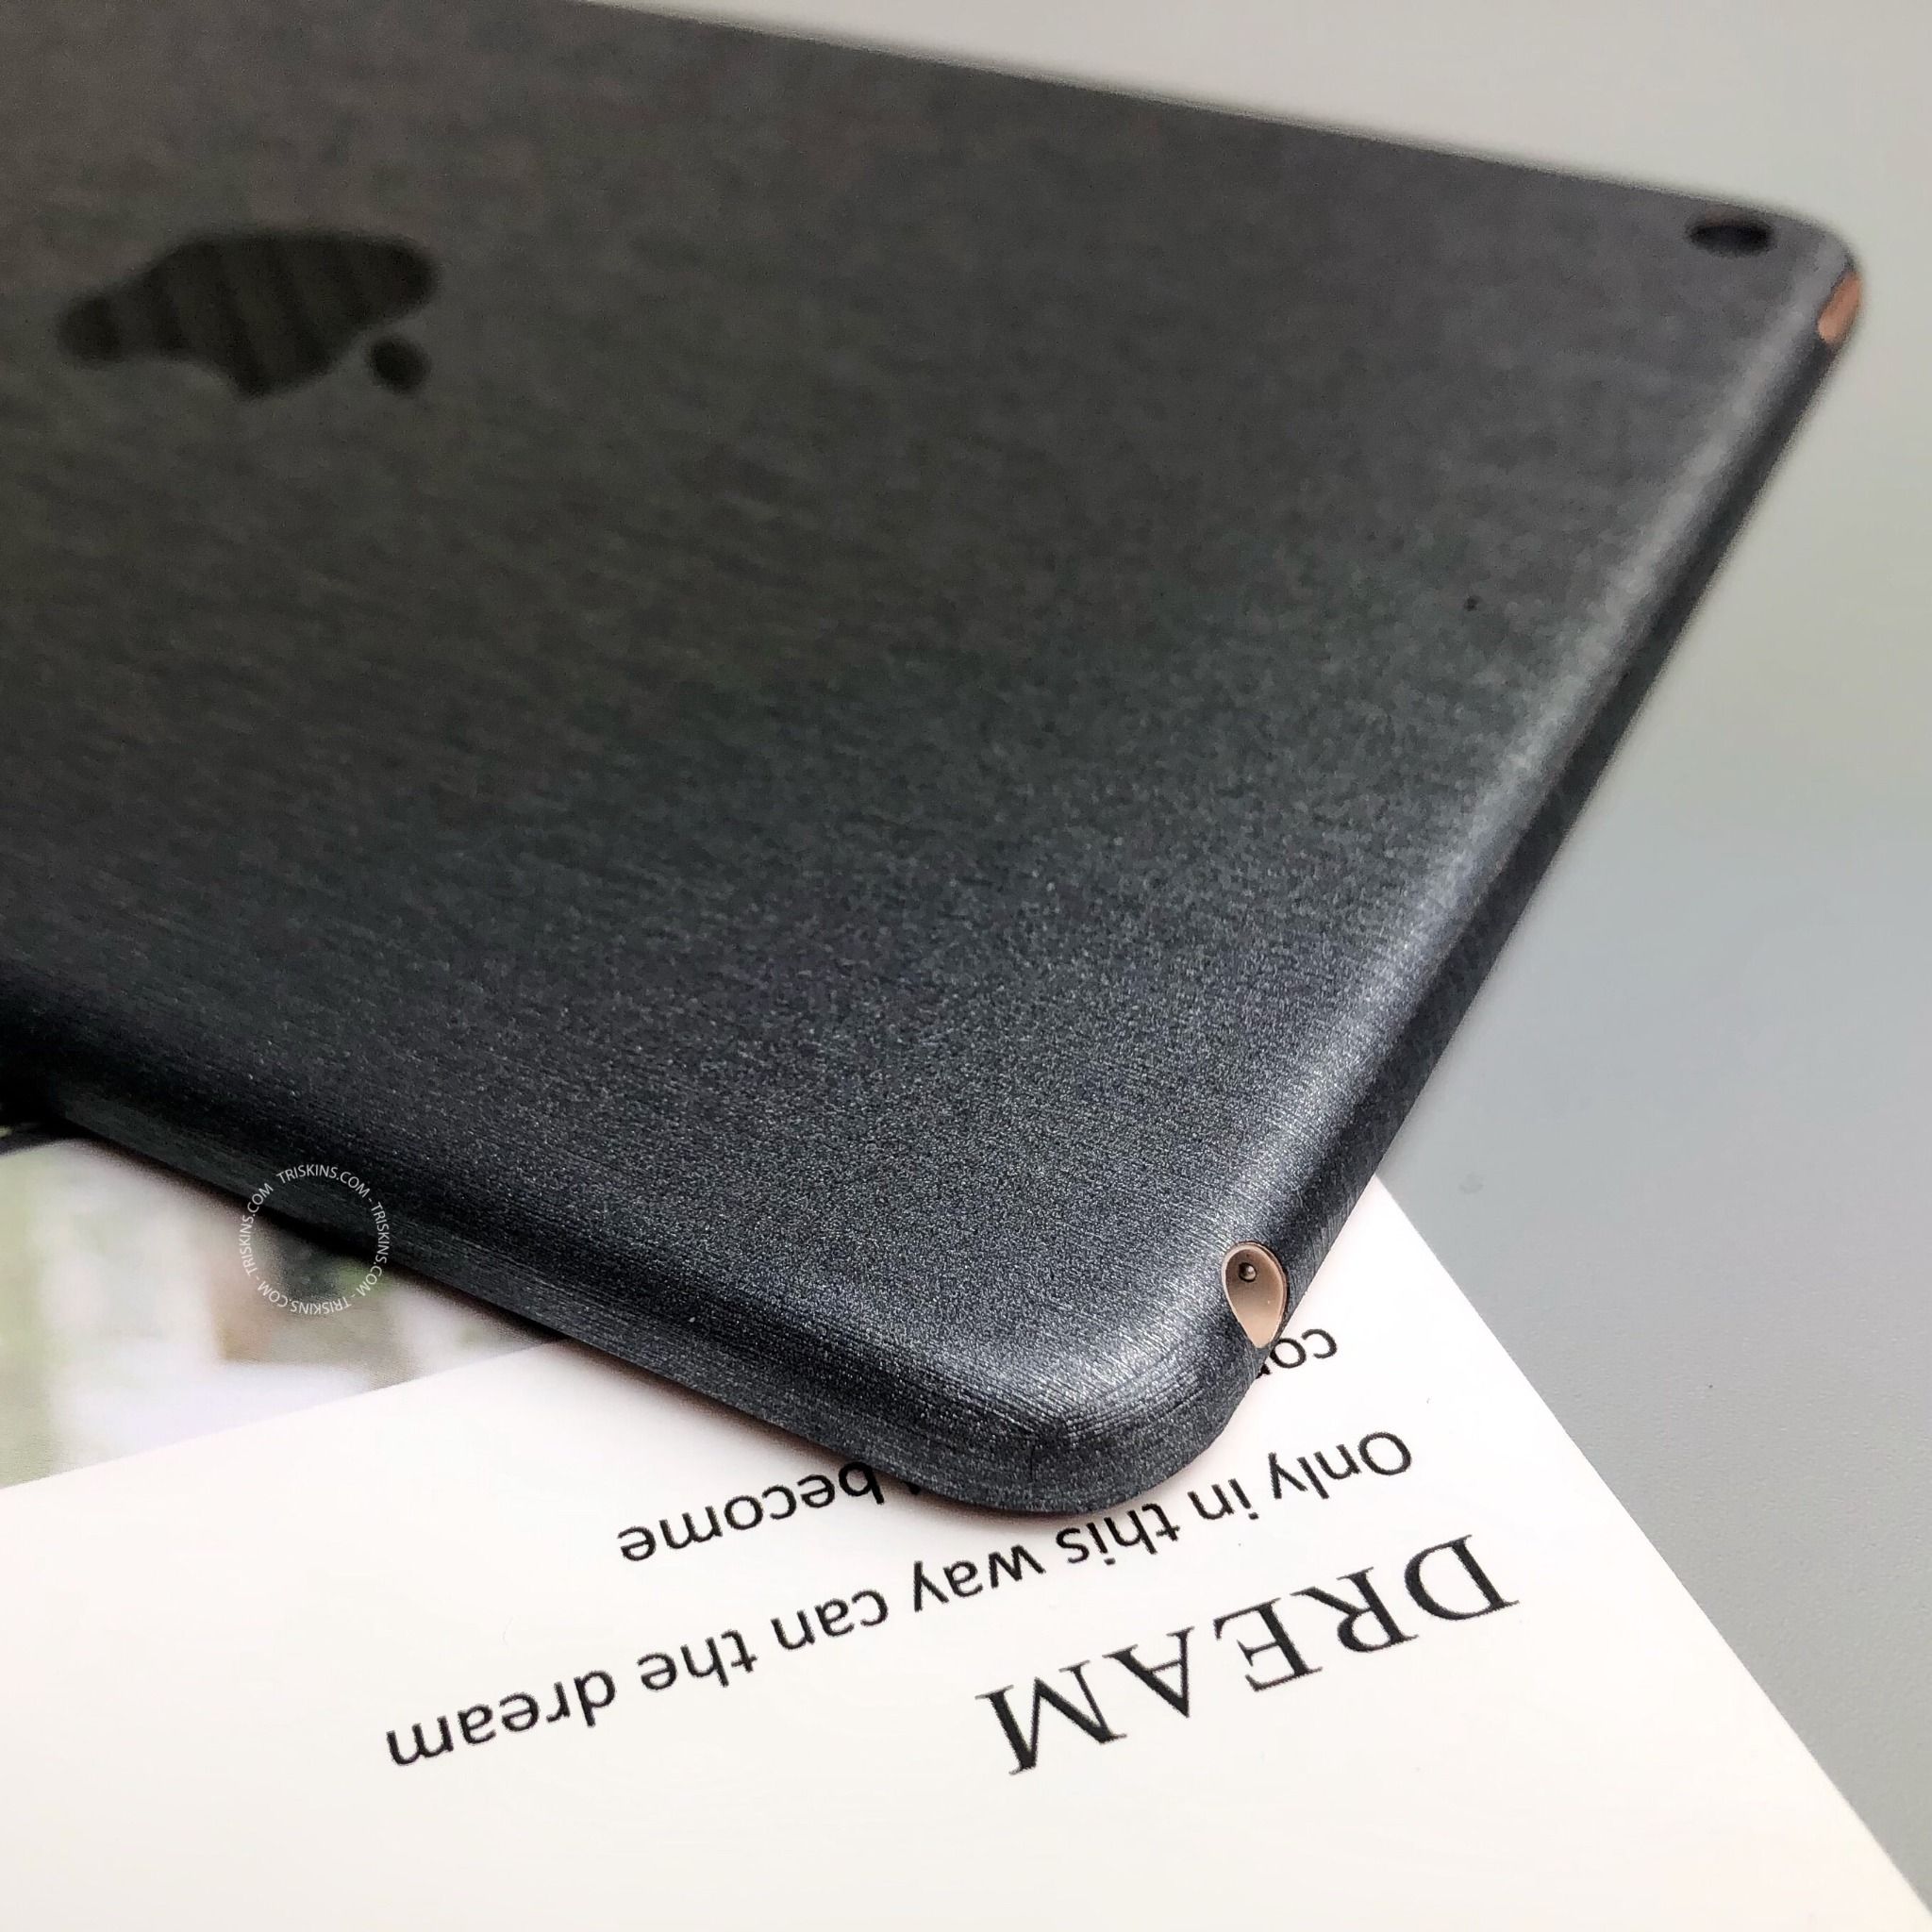  Dán Skin 3M iPad Pro 11 inch 12.9 inch - Brushed Steel  By TRISKINS 